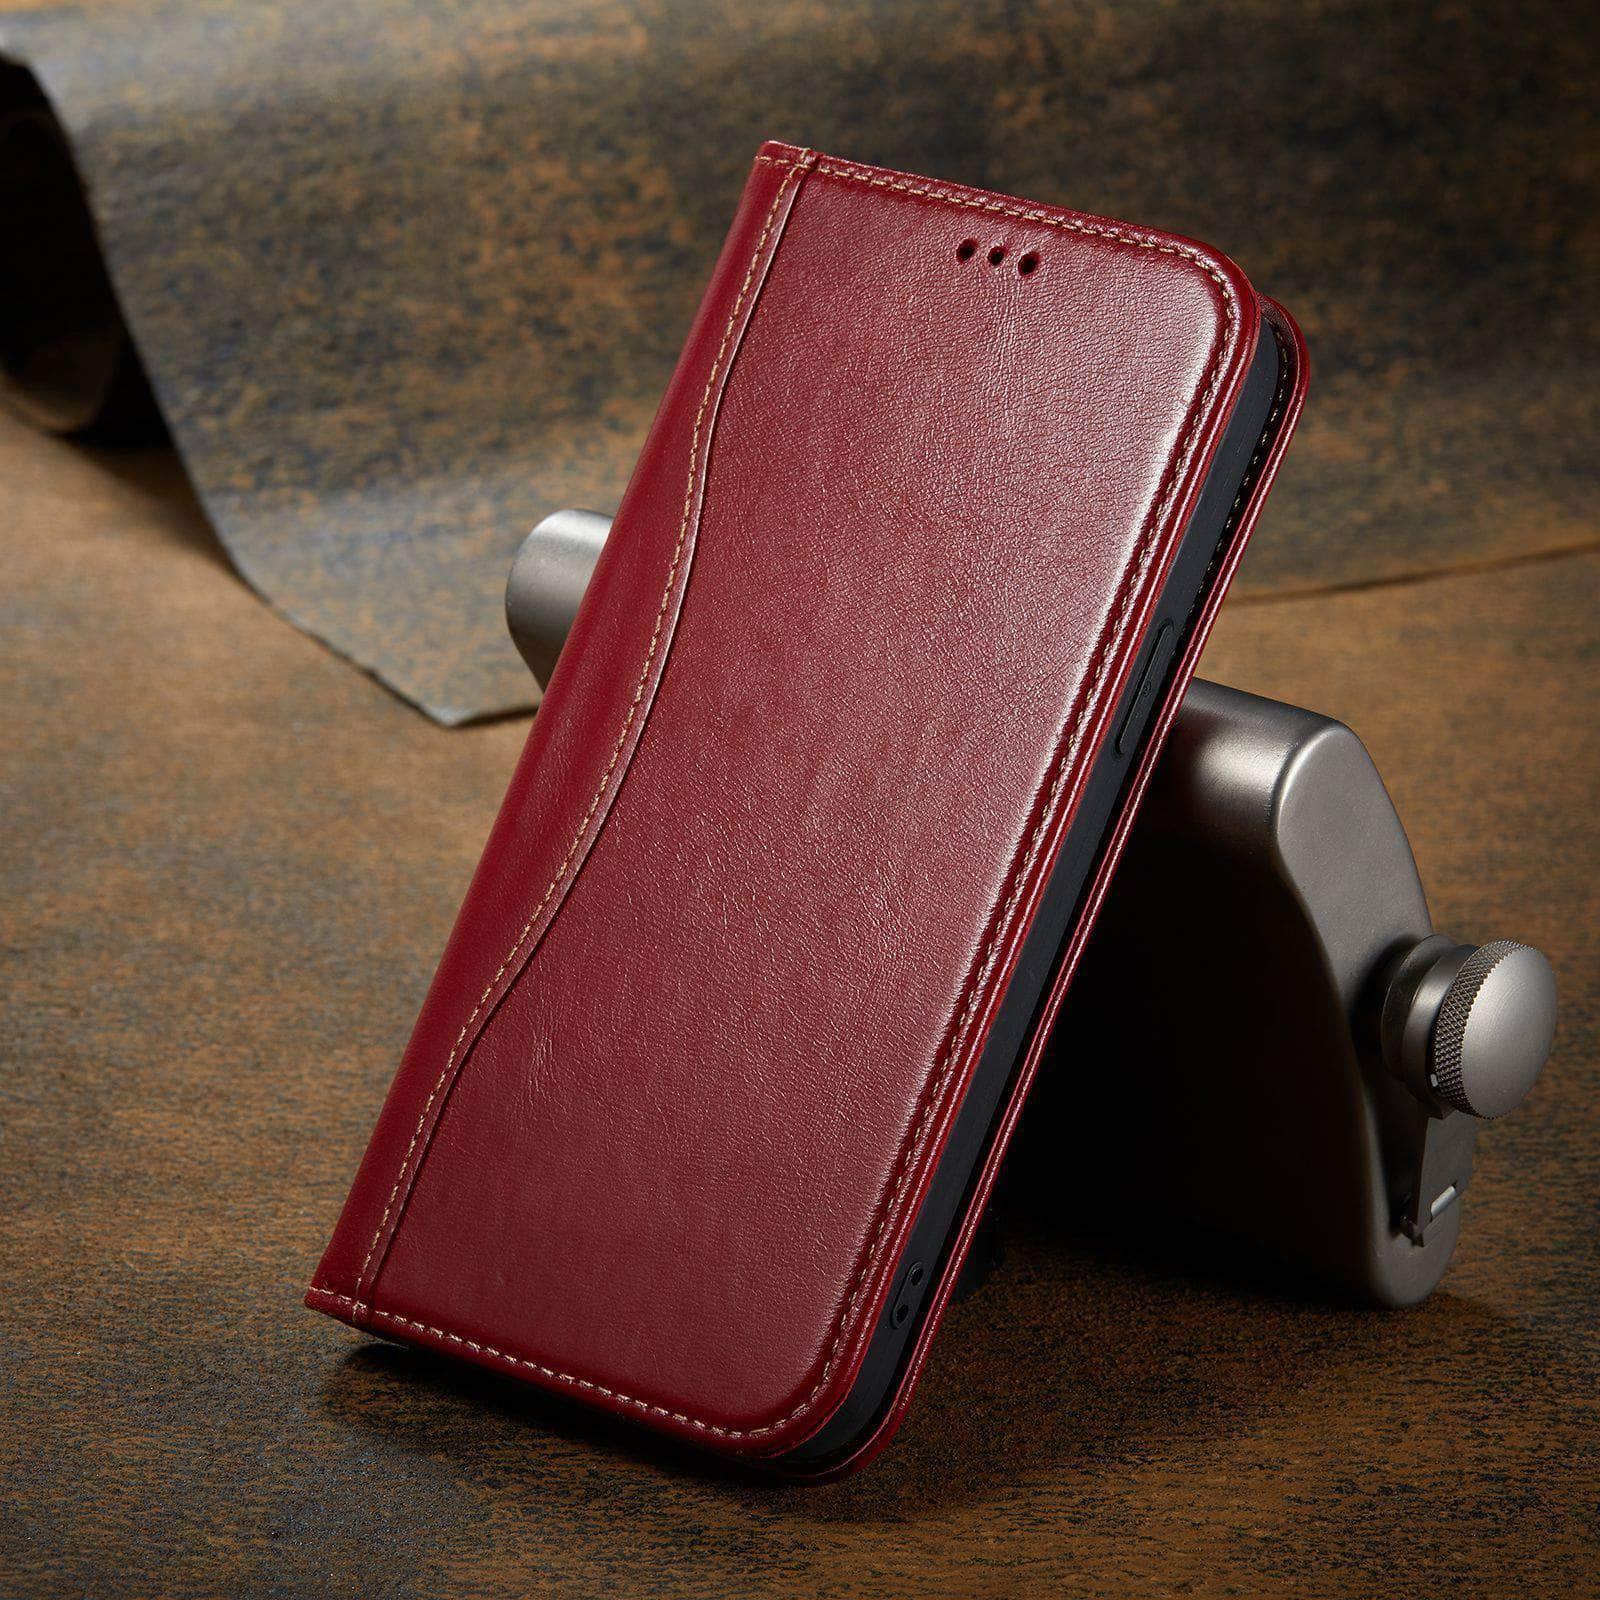 CaseBuddy Australia Casebuddy iPhone 13 Pro Max Genuine Leather Wallet Card Slot Case